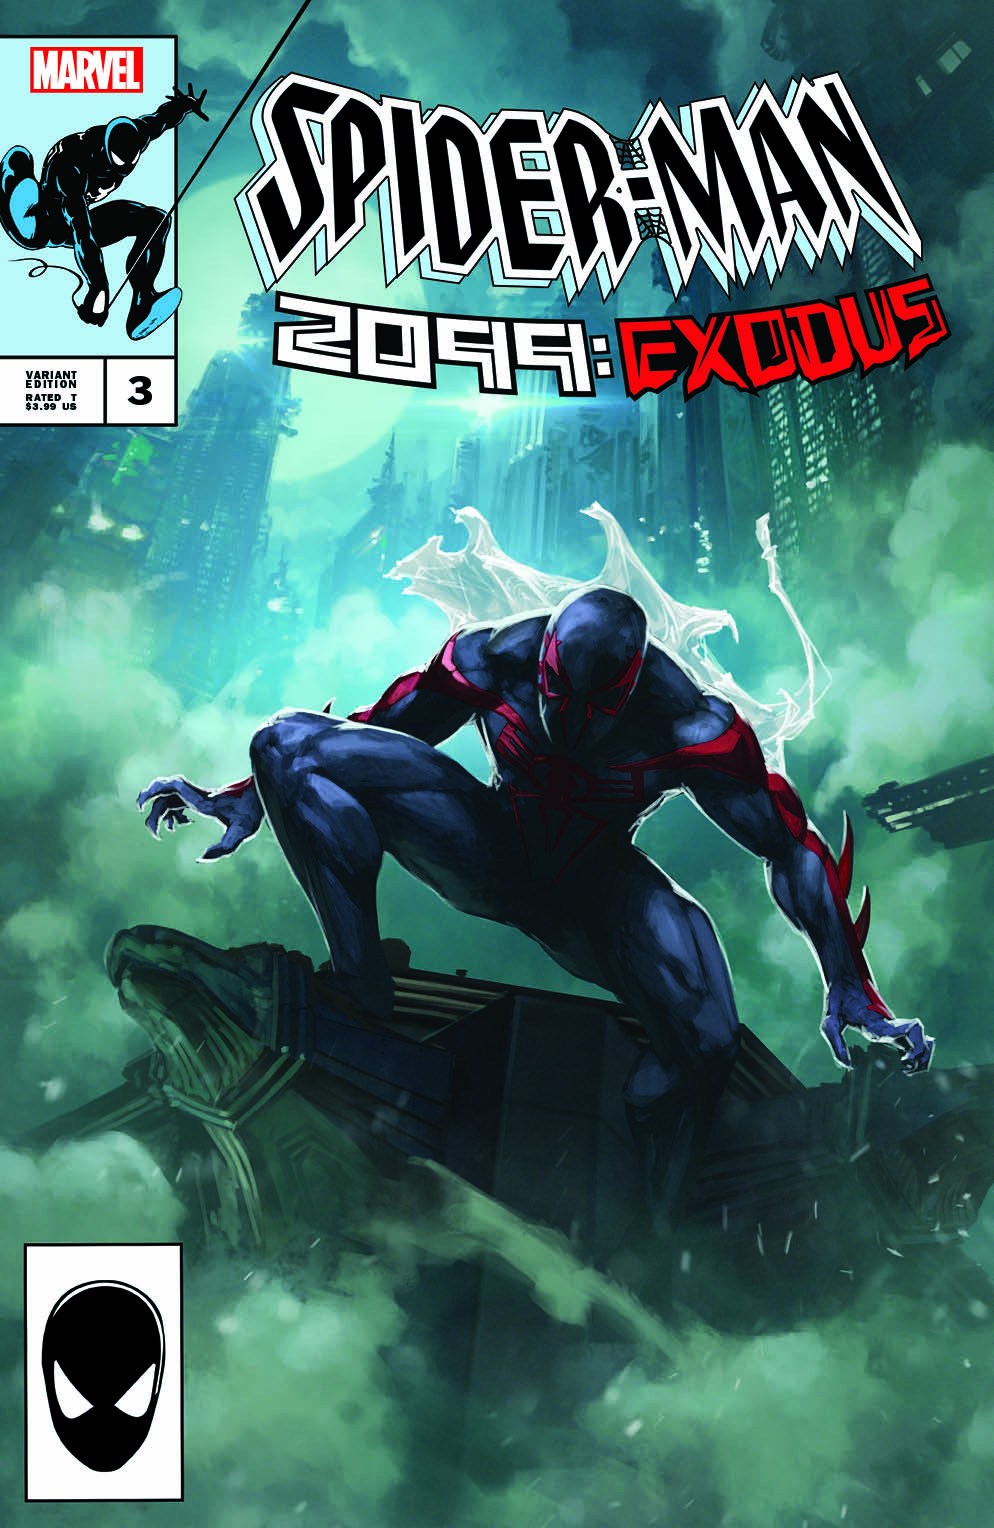 06/29/2022 SPIDER-MAN 2099 EXODUS #3 SKAN SRISUWAN EXCLUSIVE VARIANT OPTIONS (M1)